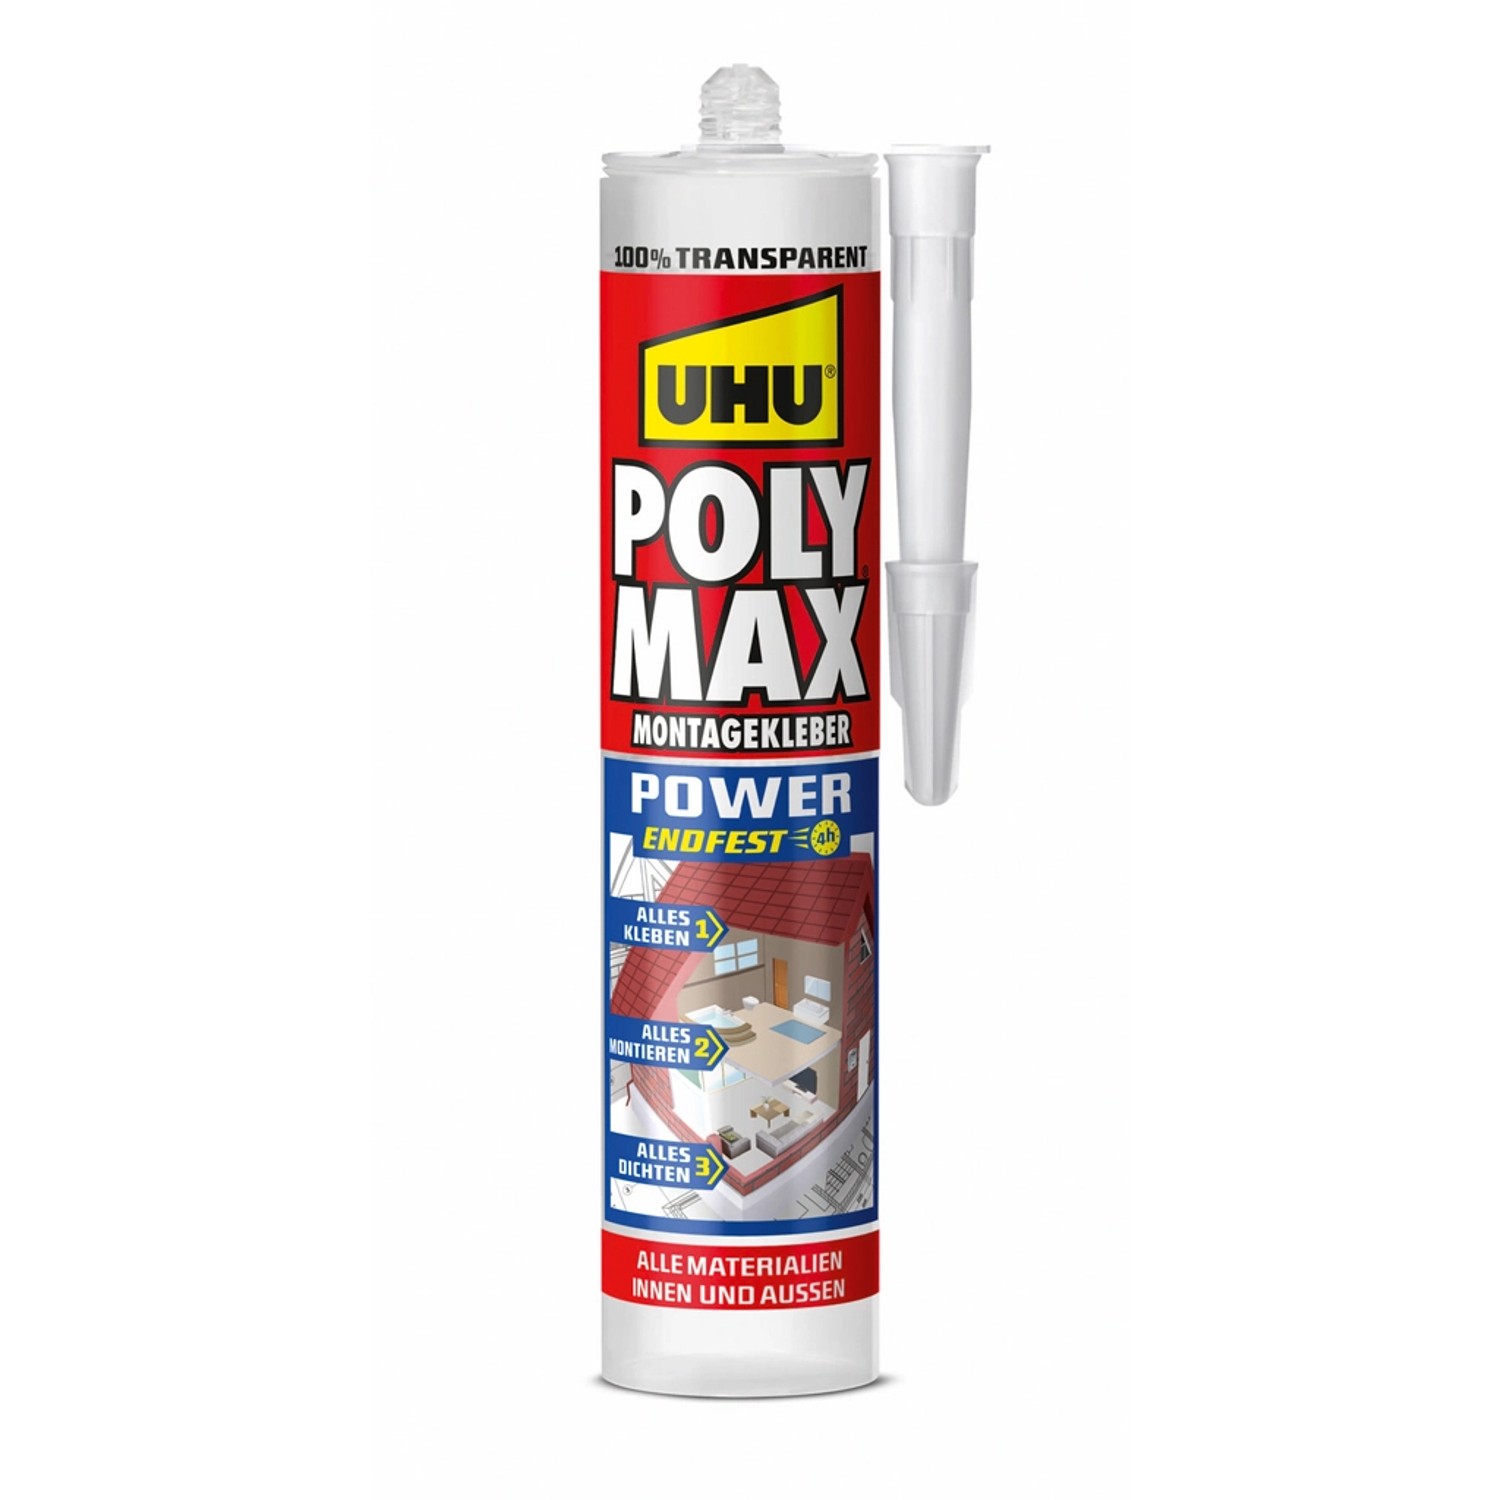 UHU Poly Max Montagekleber Power Transparent 300 g